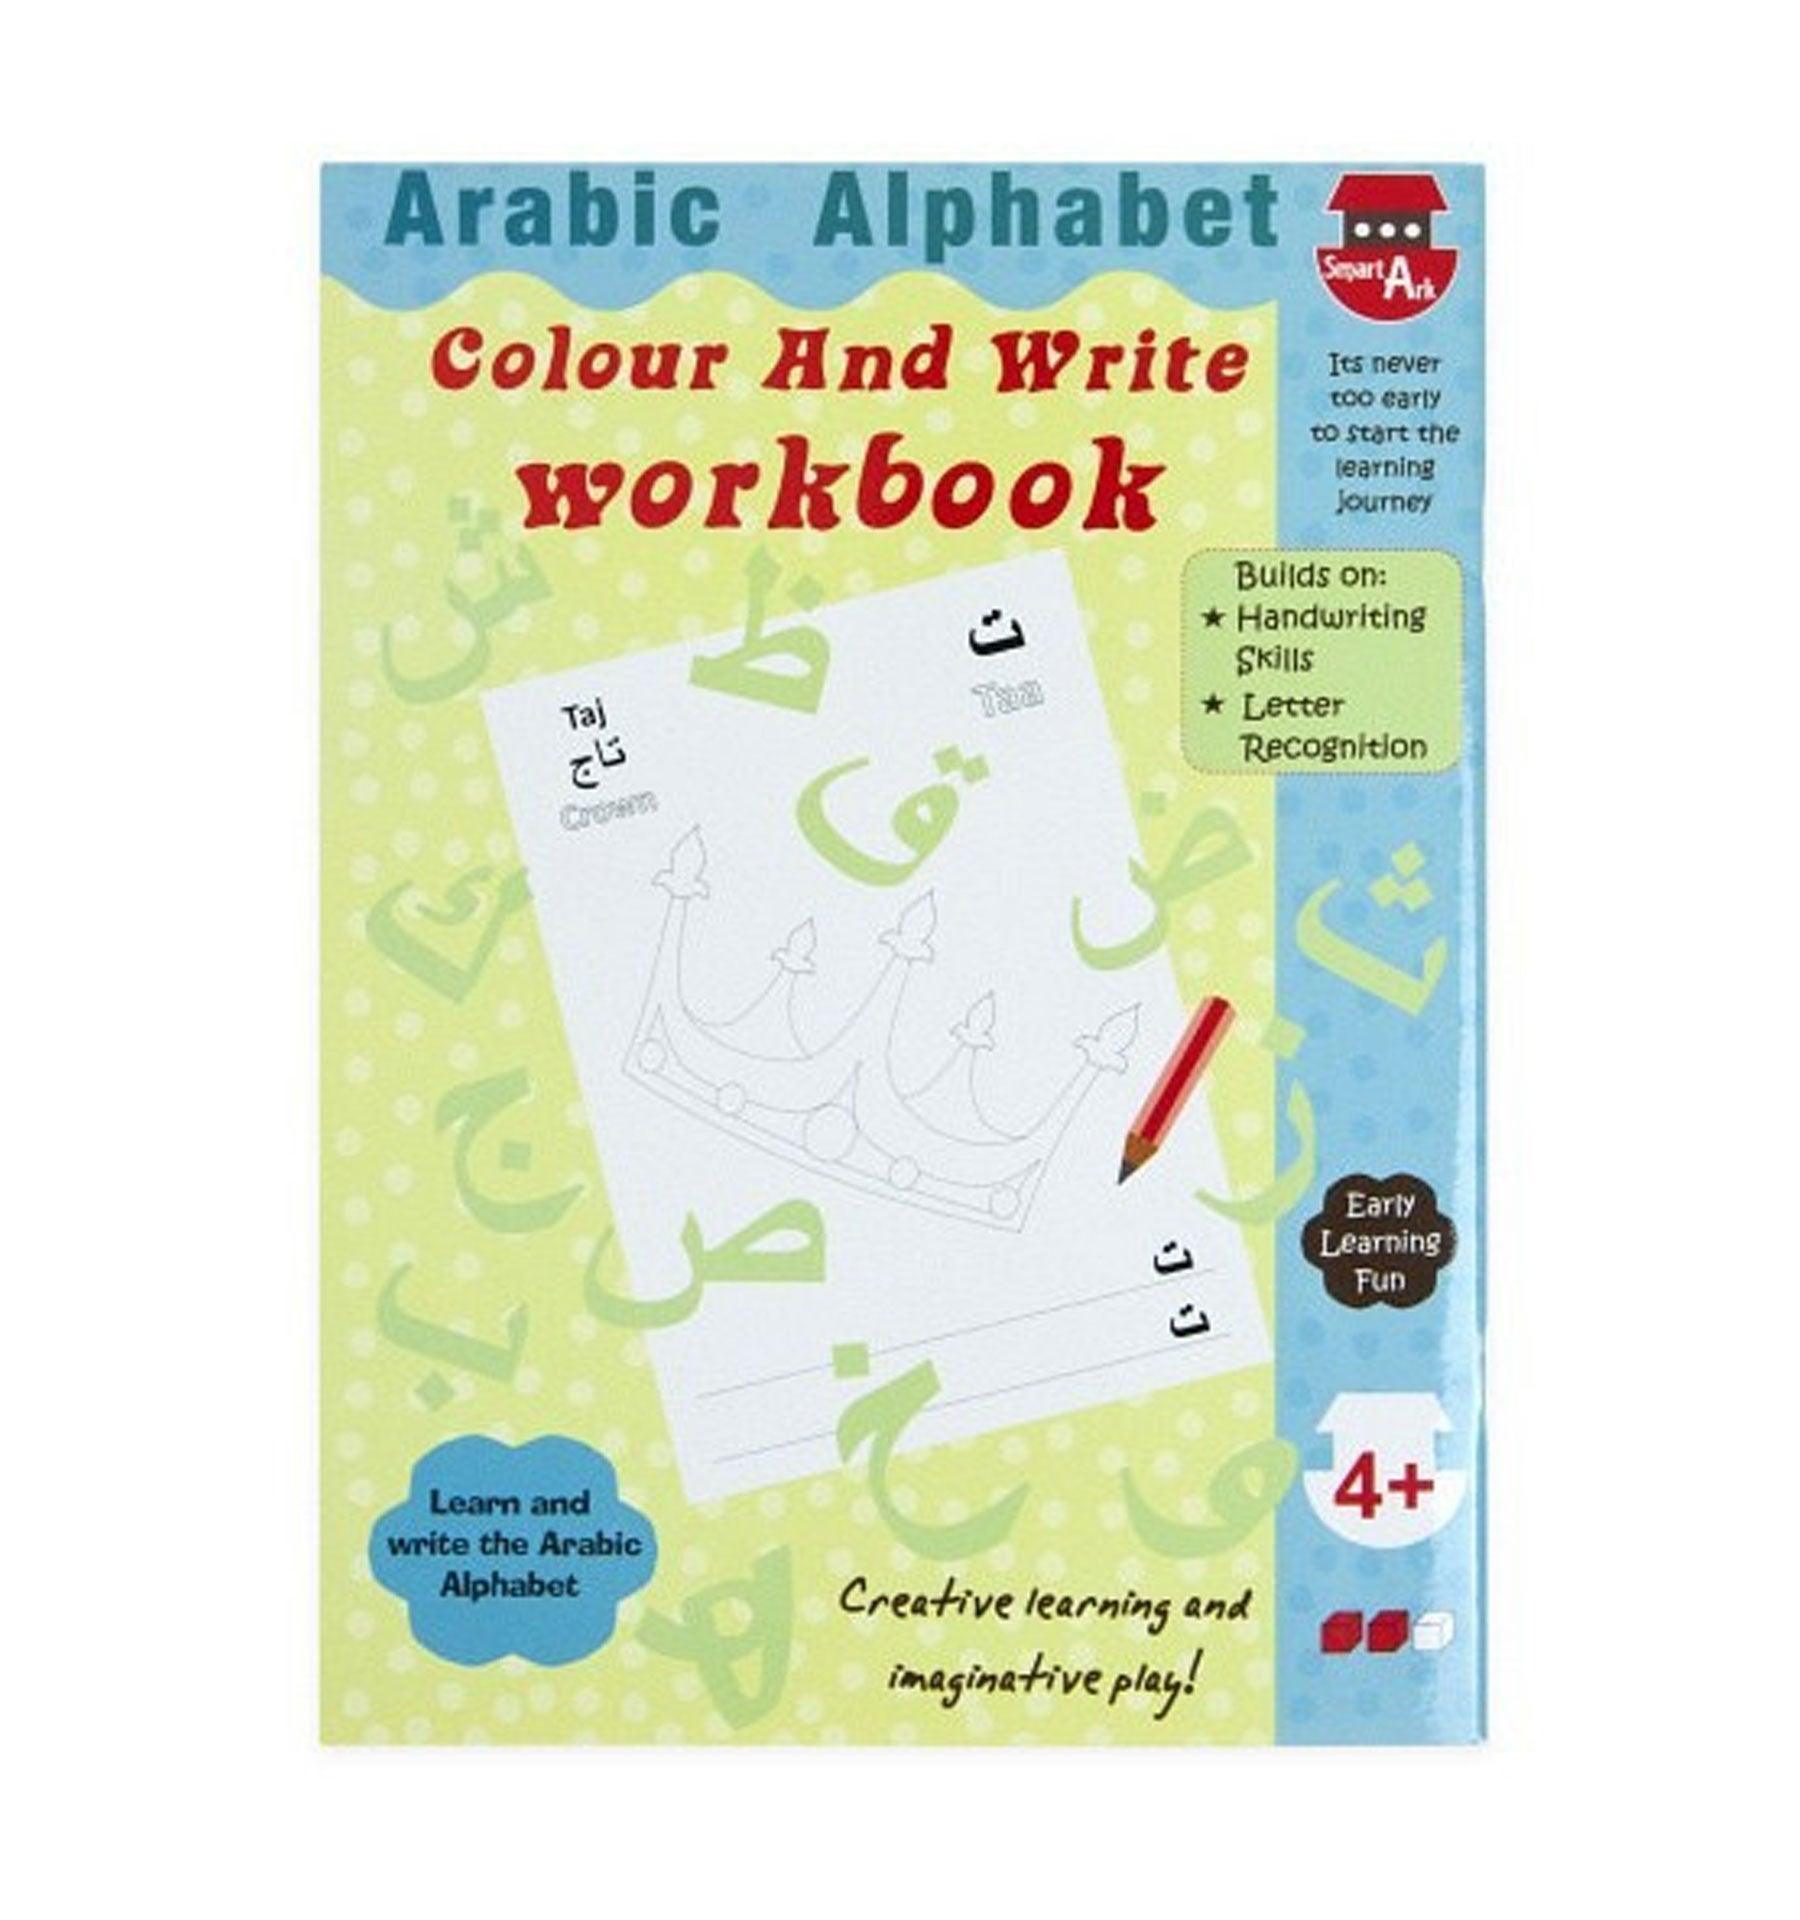 Arabic Alphabet Colour and Write Workbook - Islamic Pixels